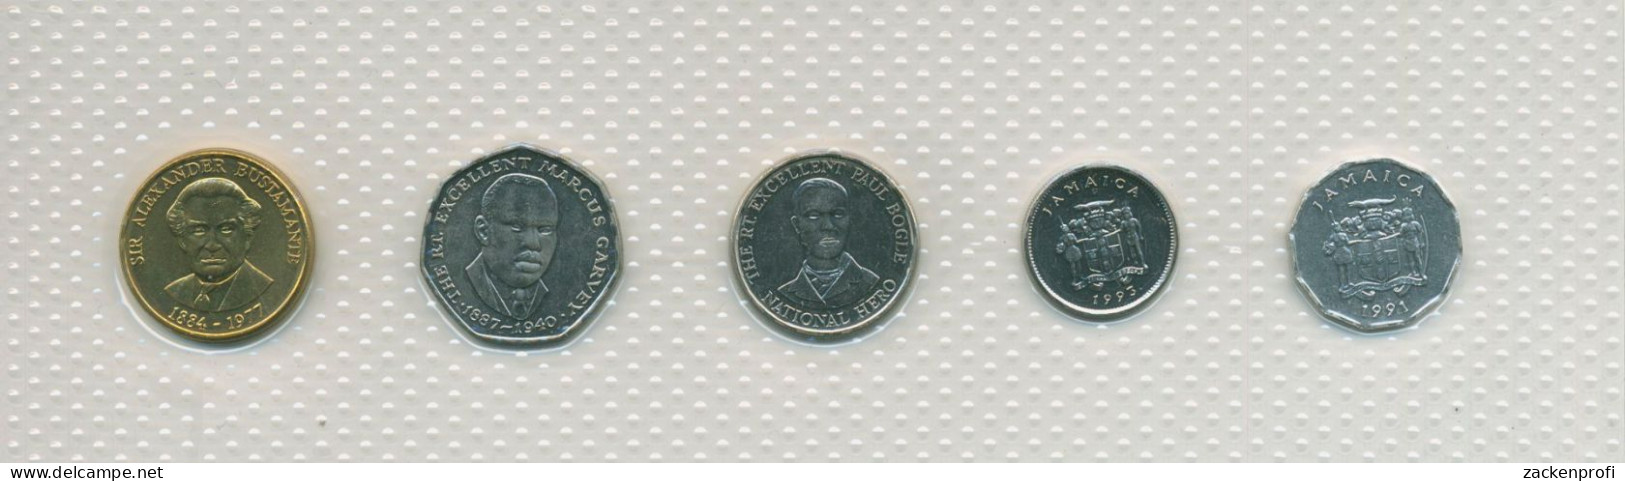 Jamaika 1991/1993 Kursmünzen 1 Cent - 1 Dollar Im Blister, St, (m5463) - Jamaica